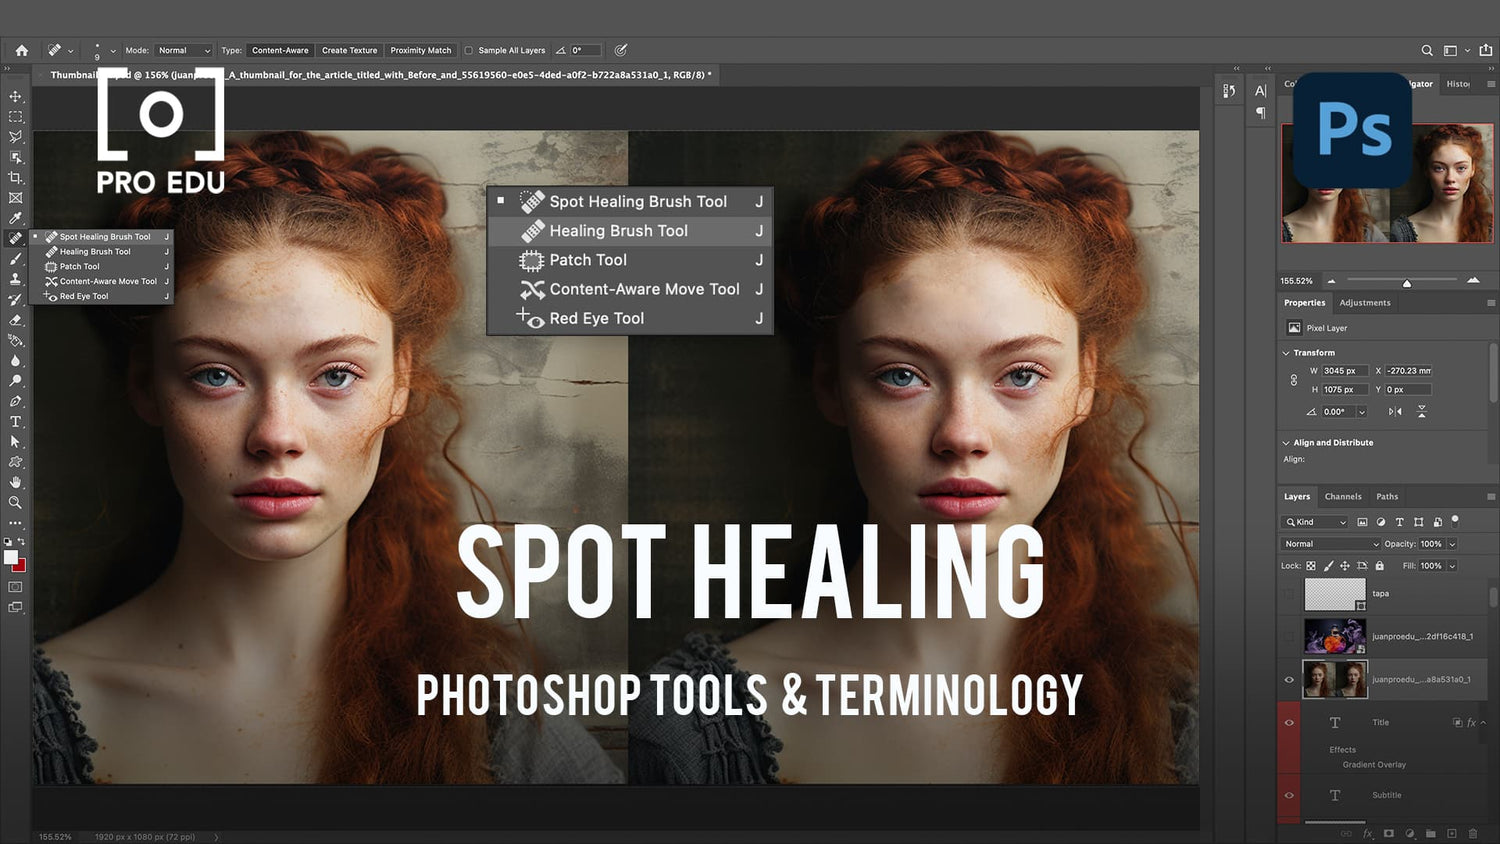 Spot Healing Tool Usage in Photoshop - PRO EDU Insight